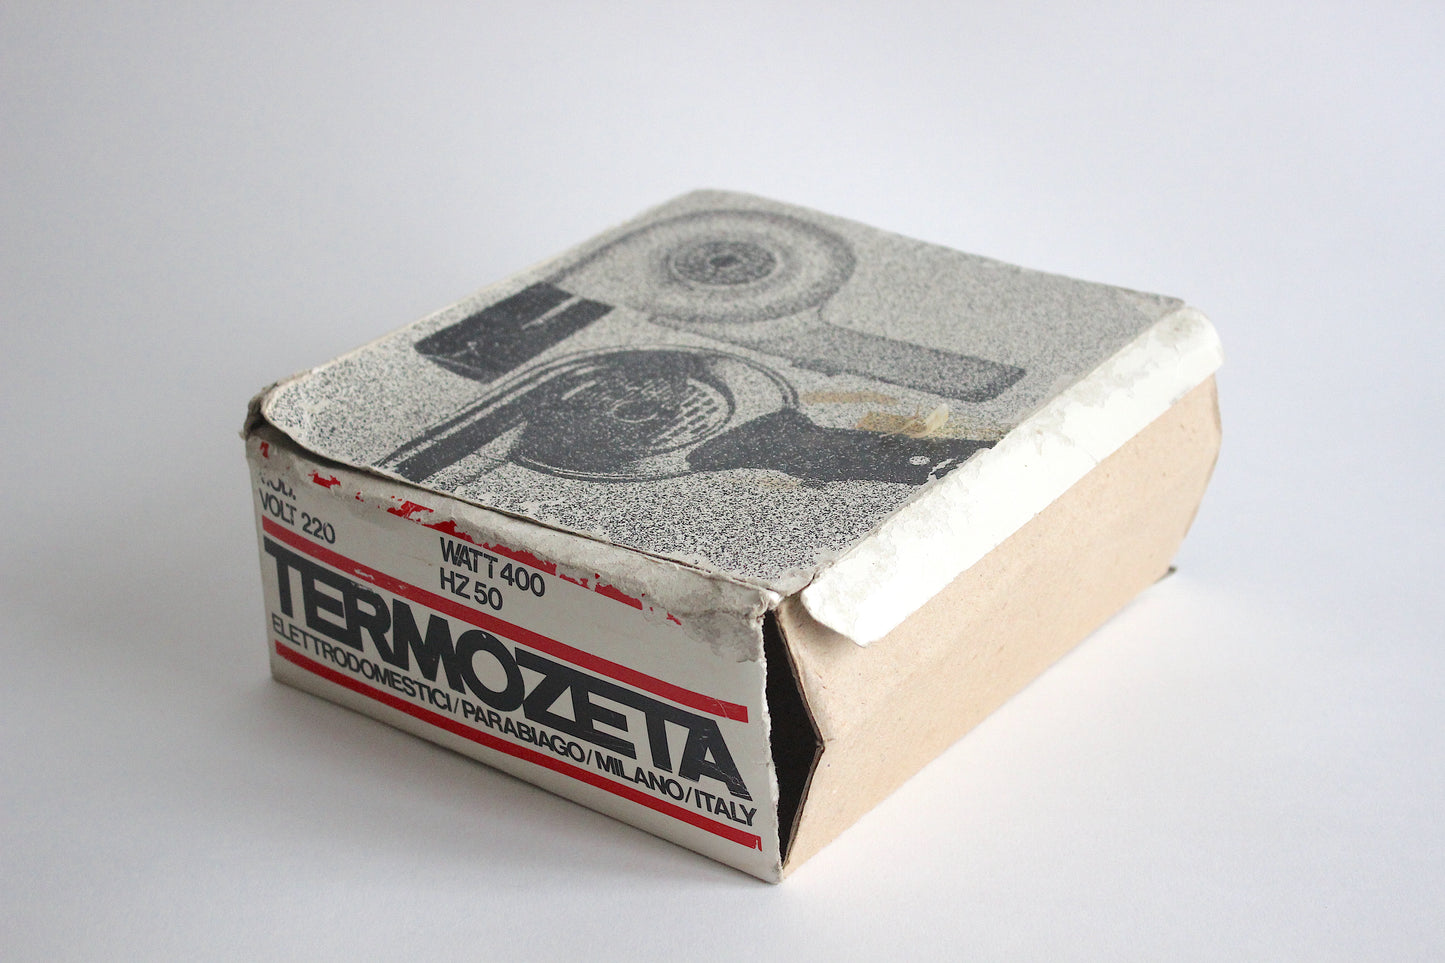 1980s Termozeta HZ 50 Hair Dryer - Italian Desig